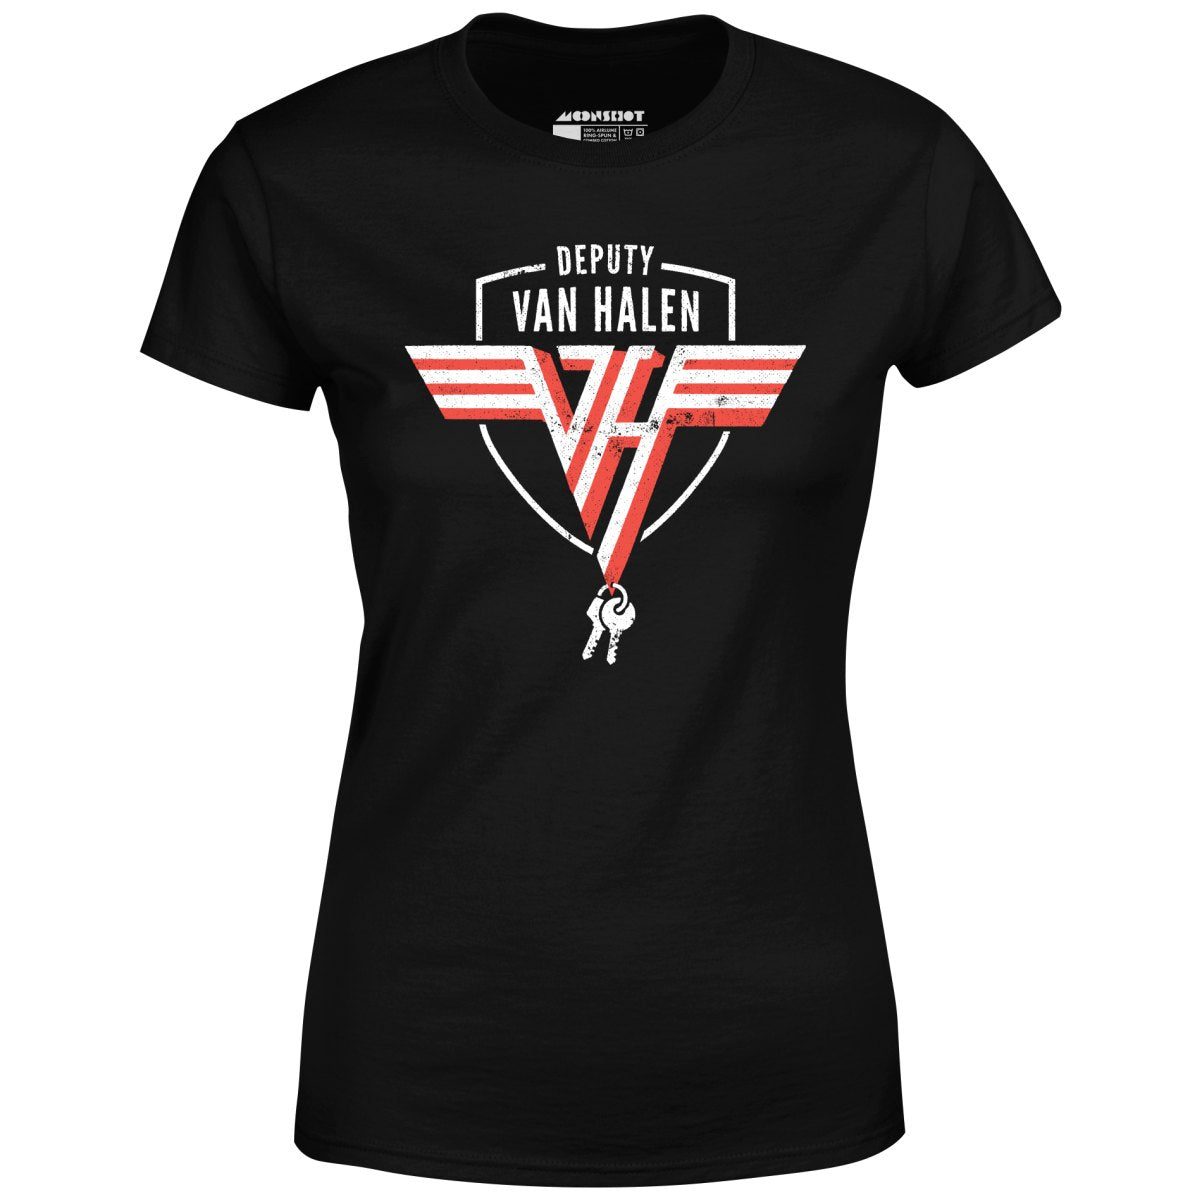 Deputy Van Halen - Women's T-Shirt